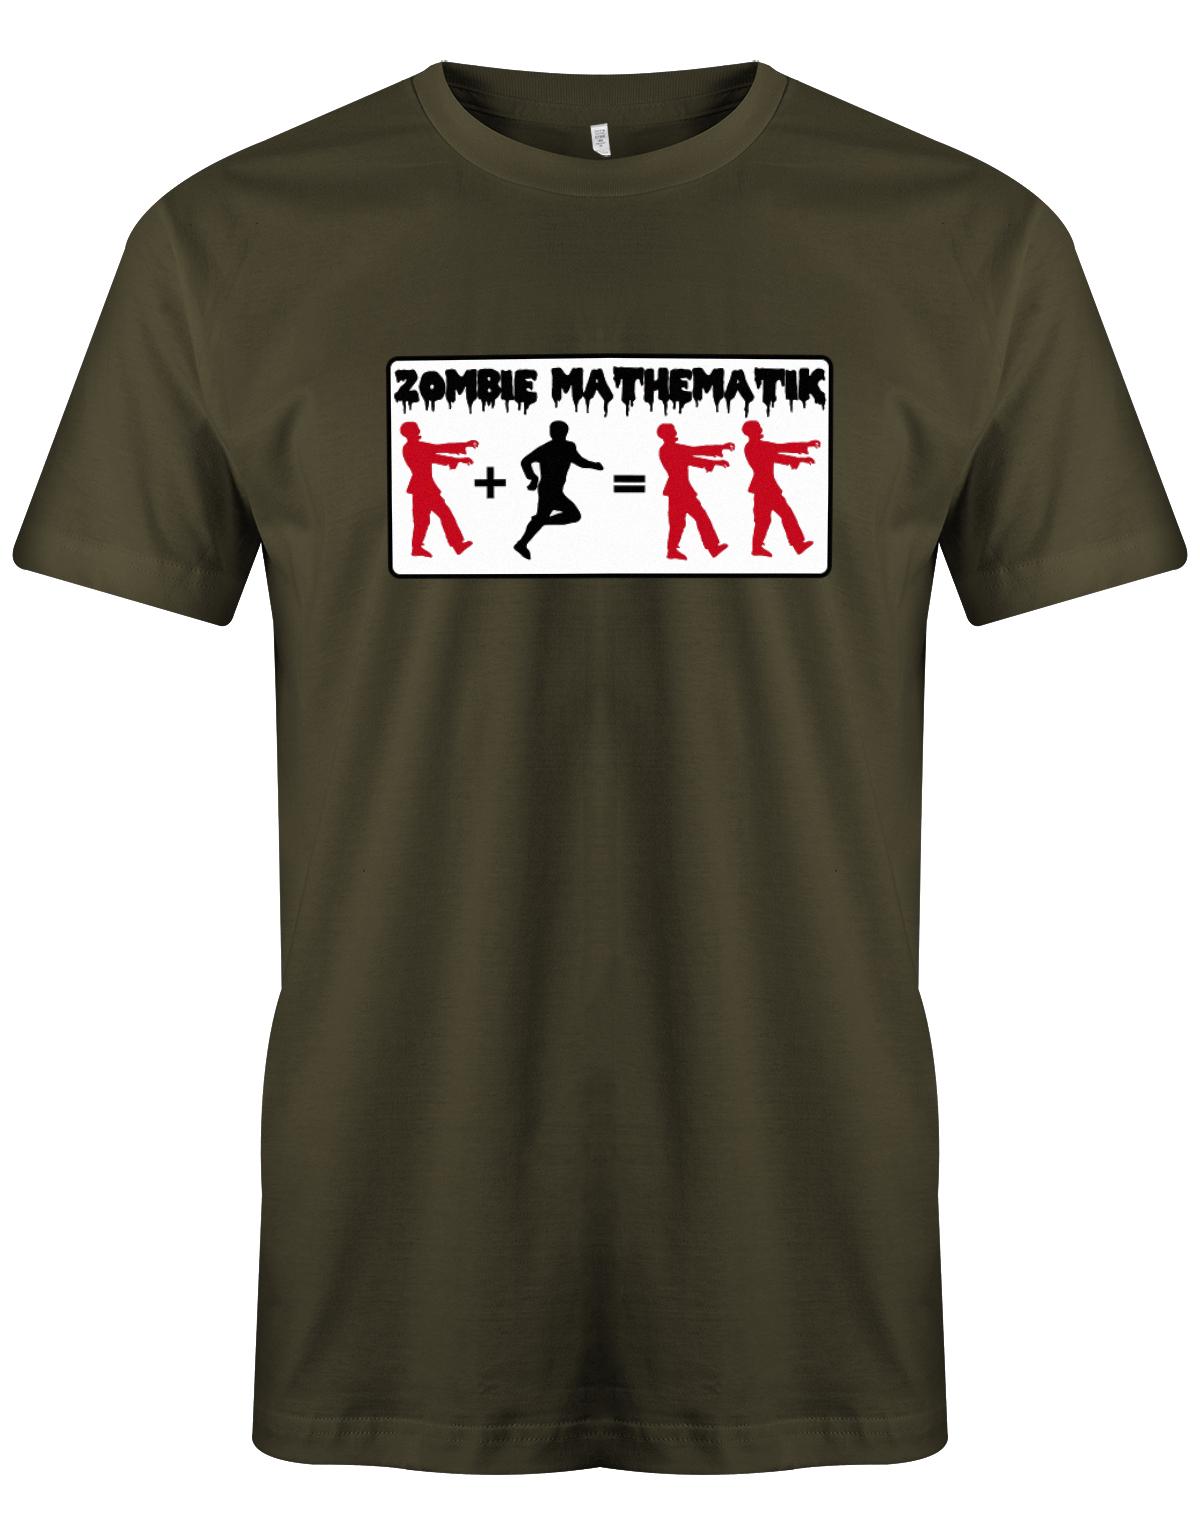 Zombie-Mathematik-Halloween-Shirt-Herren-Army